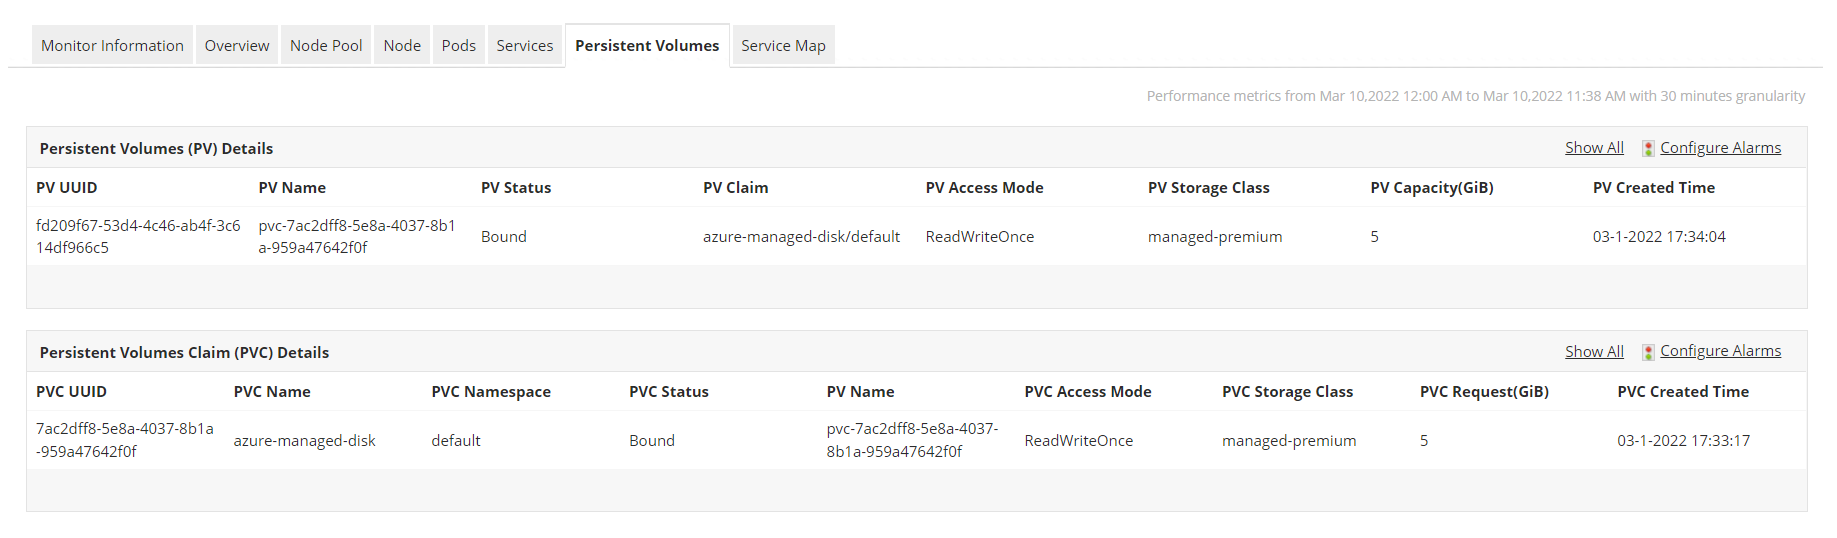 Dashboard de monitoreo de volúmenes persistentes Azure Kubernets (AKS) - Applications Manager